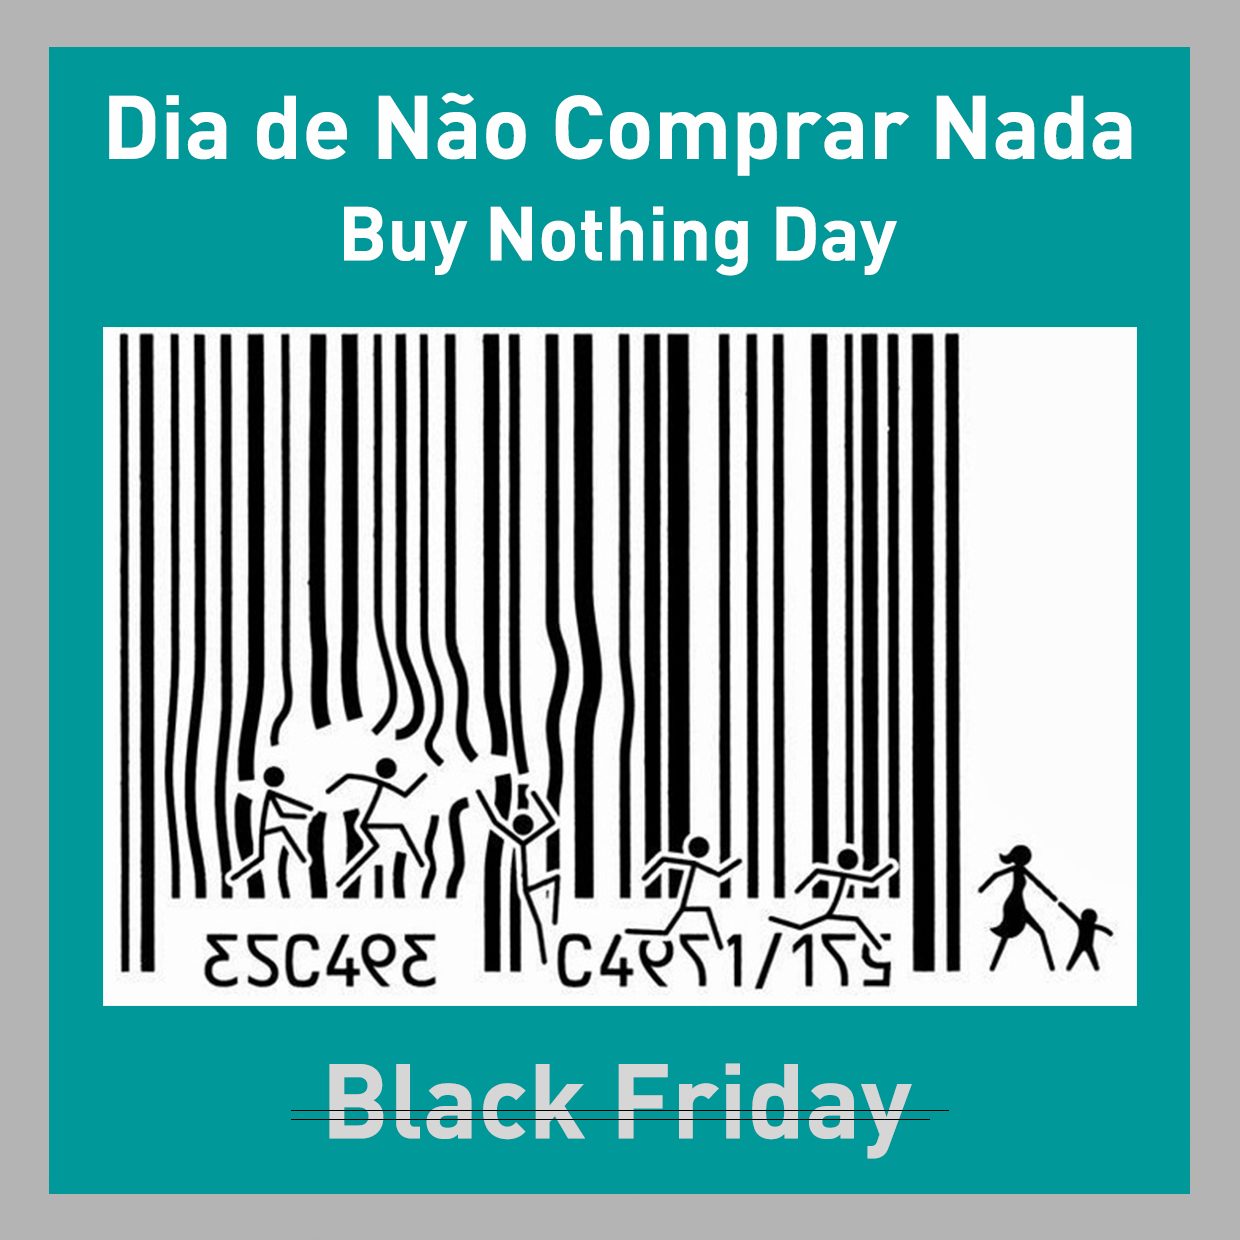 dia-nao-comprar-nada vs Black Friday